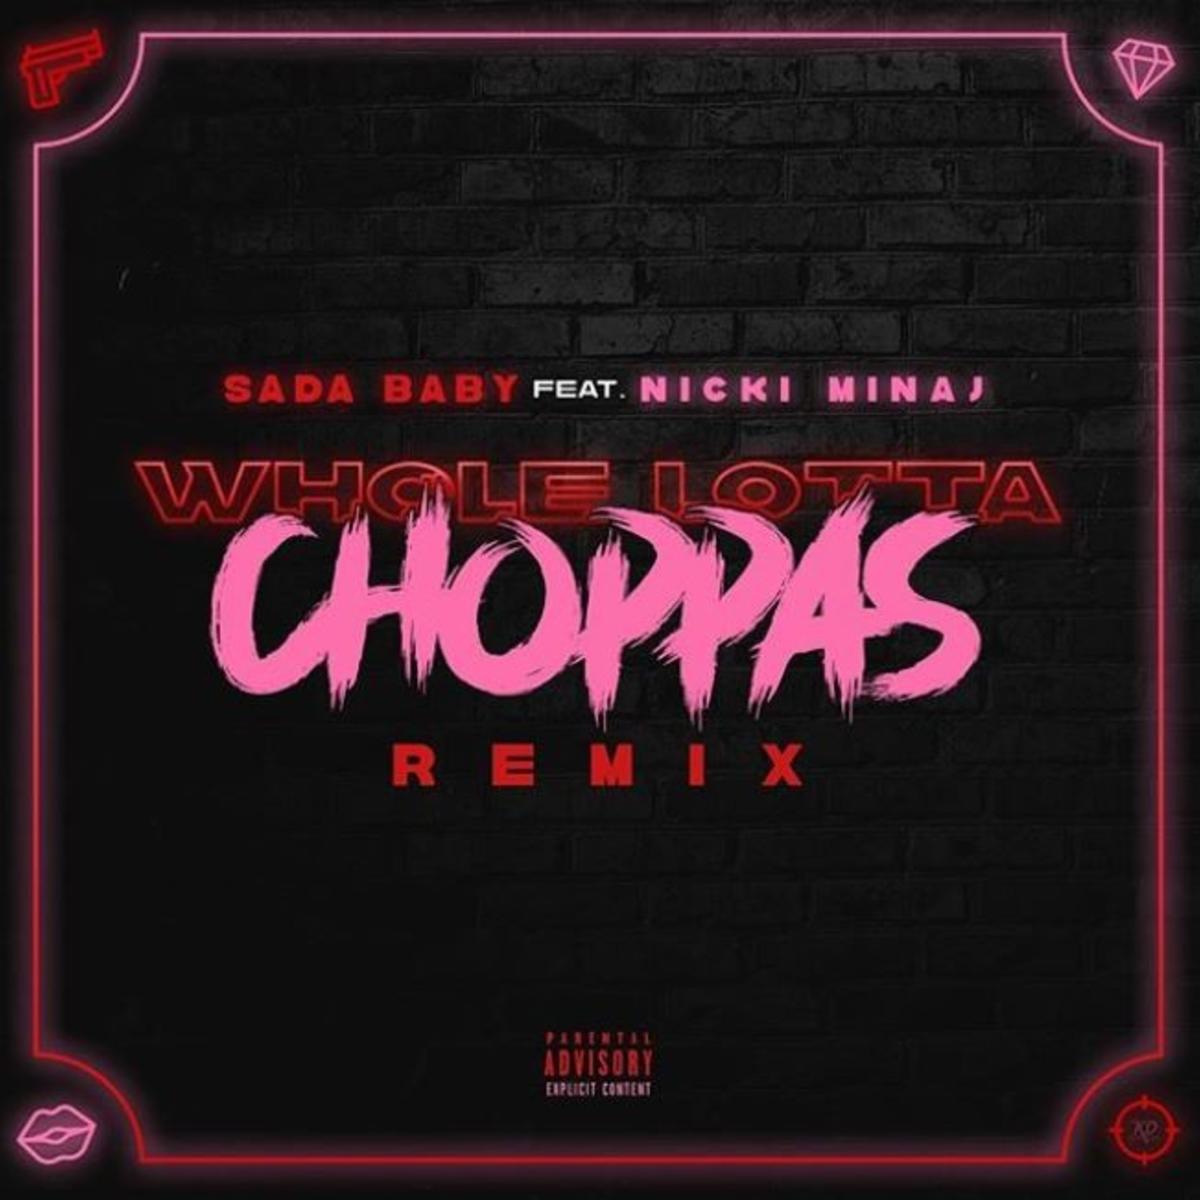 Sada Baby & Nicki Minaj Link Up For “Whole Lotta Choppas (Remix)”